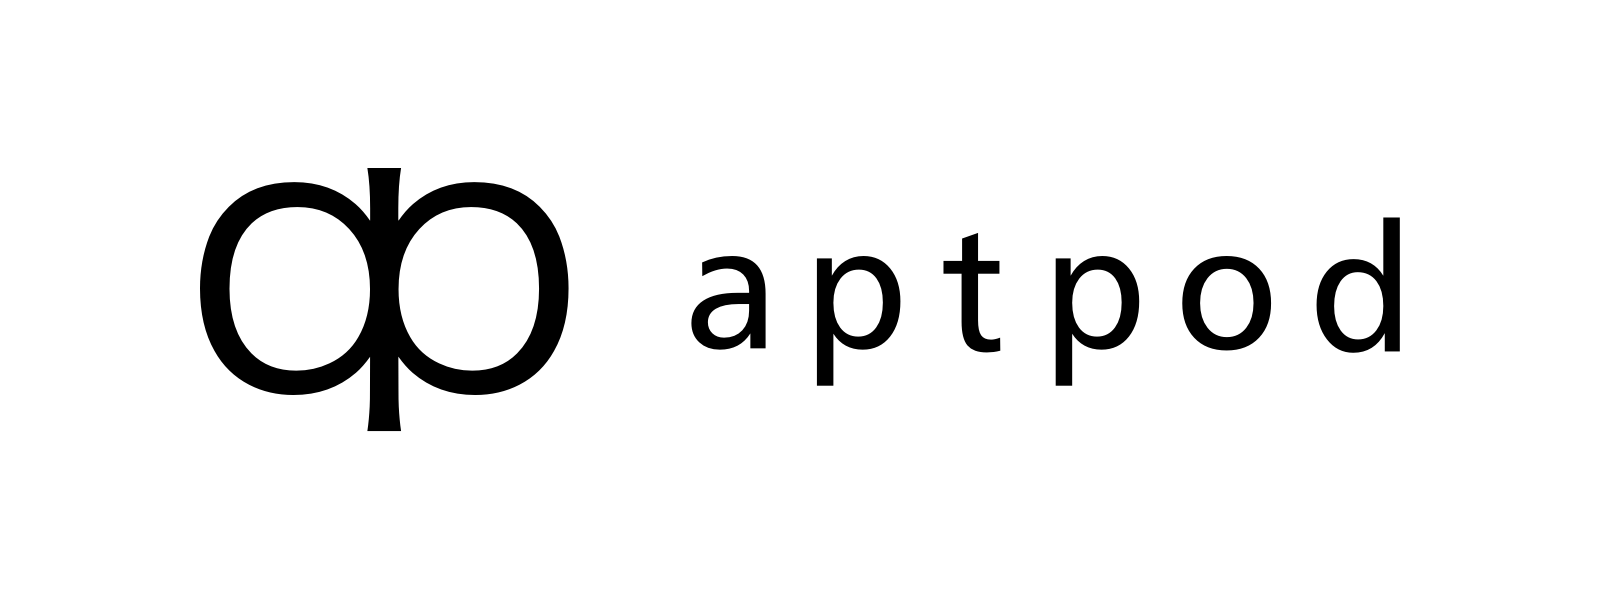 aptpod black logo